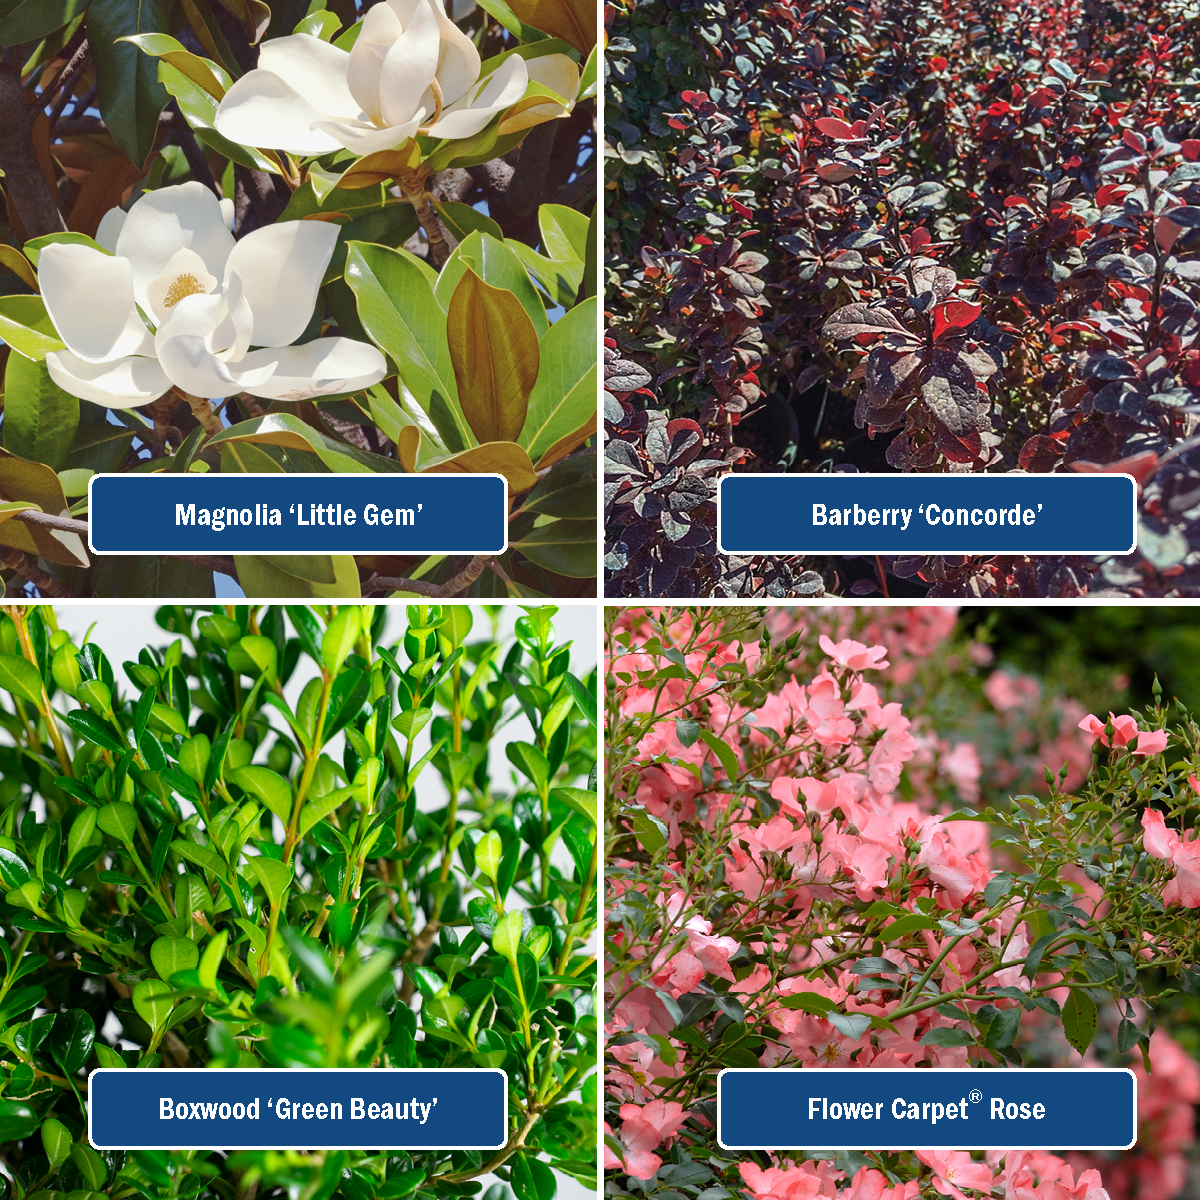 Magnolia Little Gem,  Bareberry Concorde, Boxwood Green Beauty, Flower Carpet Rose